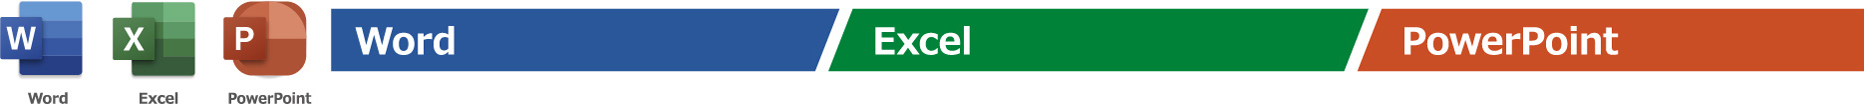 Word Excel PowerPoint